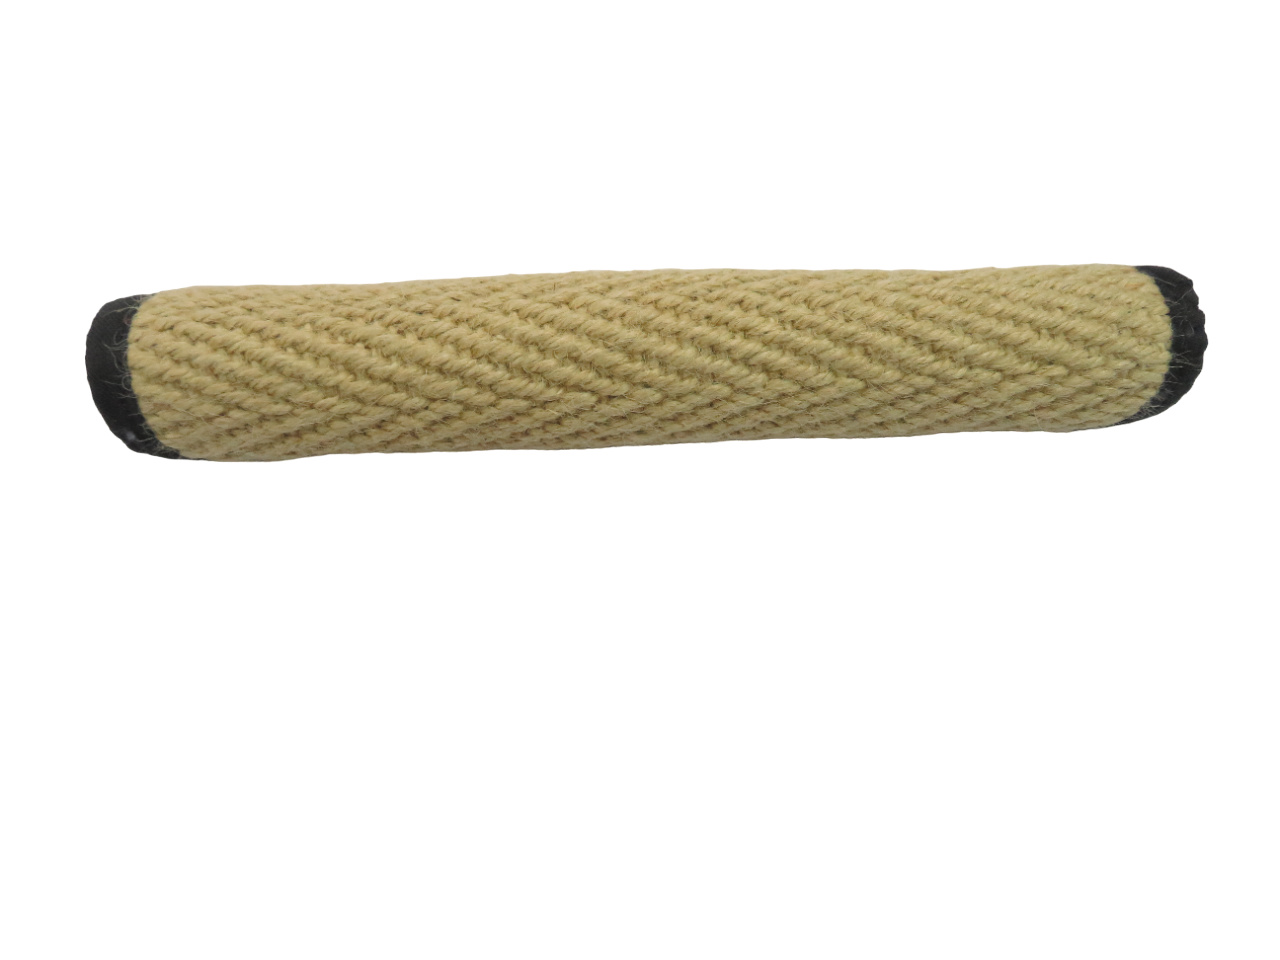 BOW WOW BOW WOW джутовая палка без ручки (натуральная) (200 г) bow wow bow wow джутовая палка с 9 миллиметровой прорезиненной ручкой натуральная 120 г